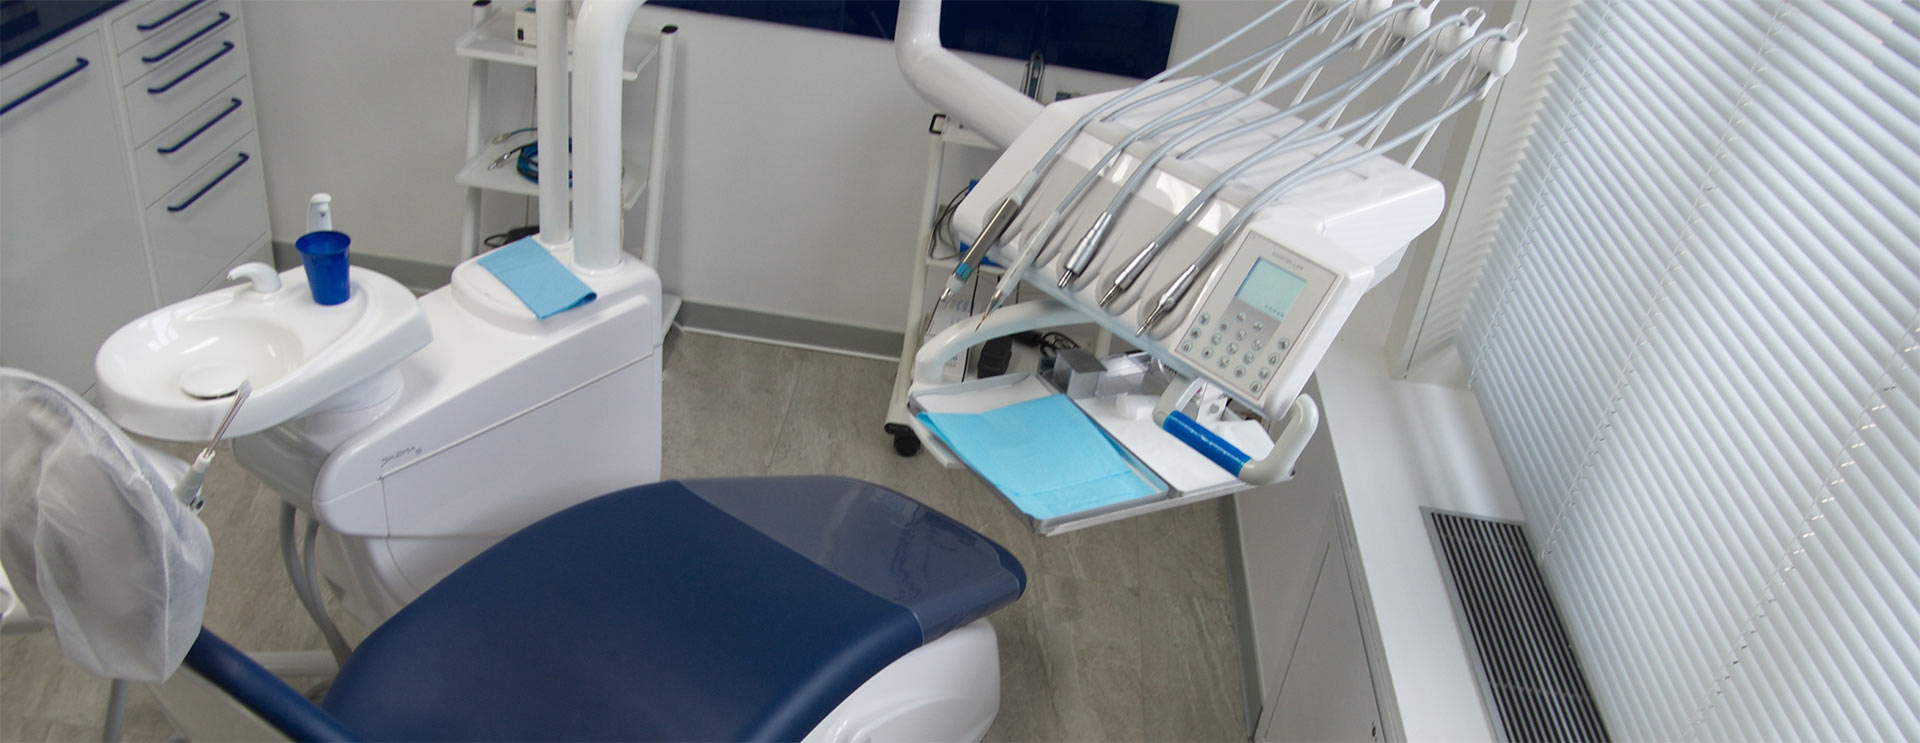 Studio dentistico San Paolo laser odontoiatria